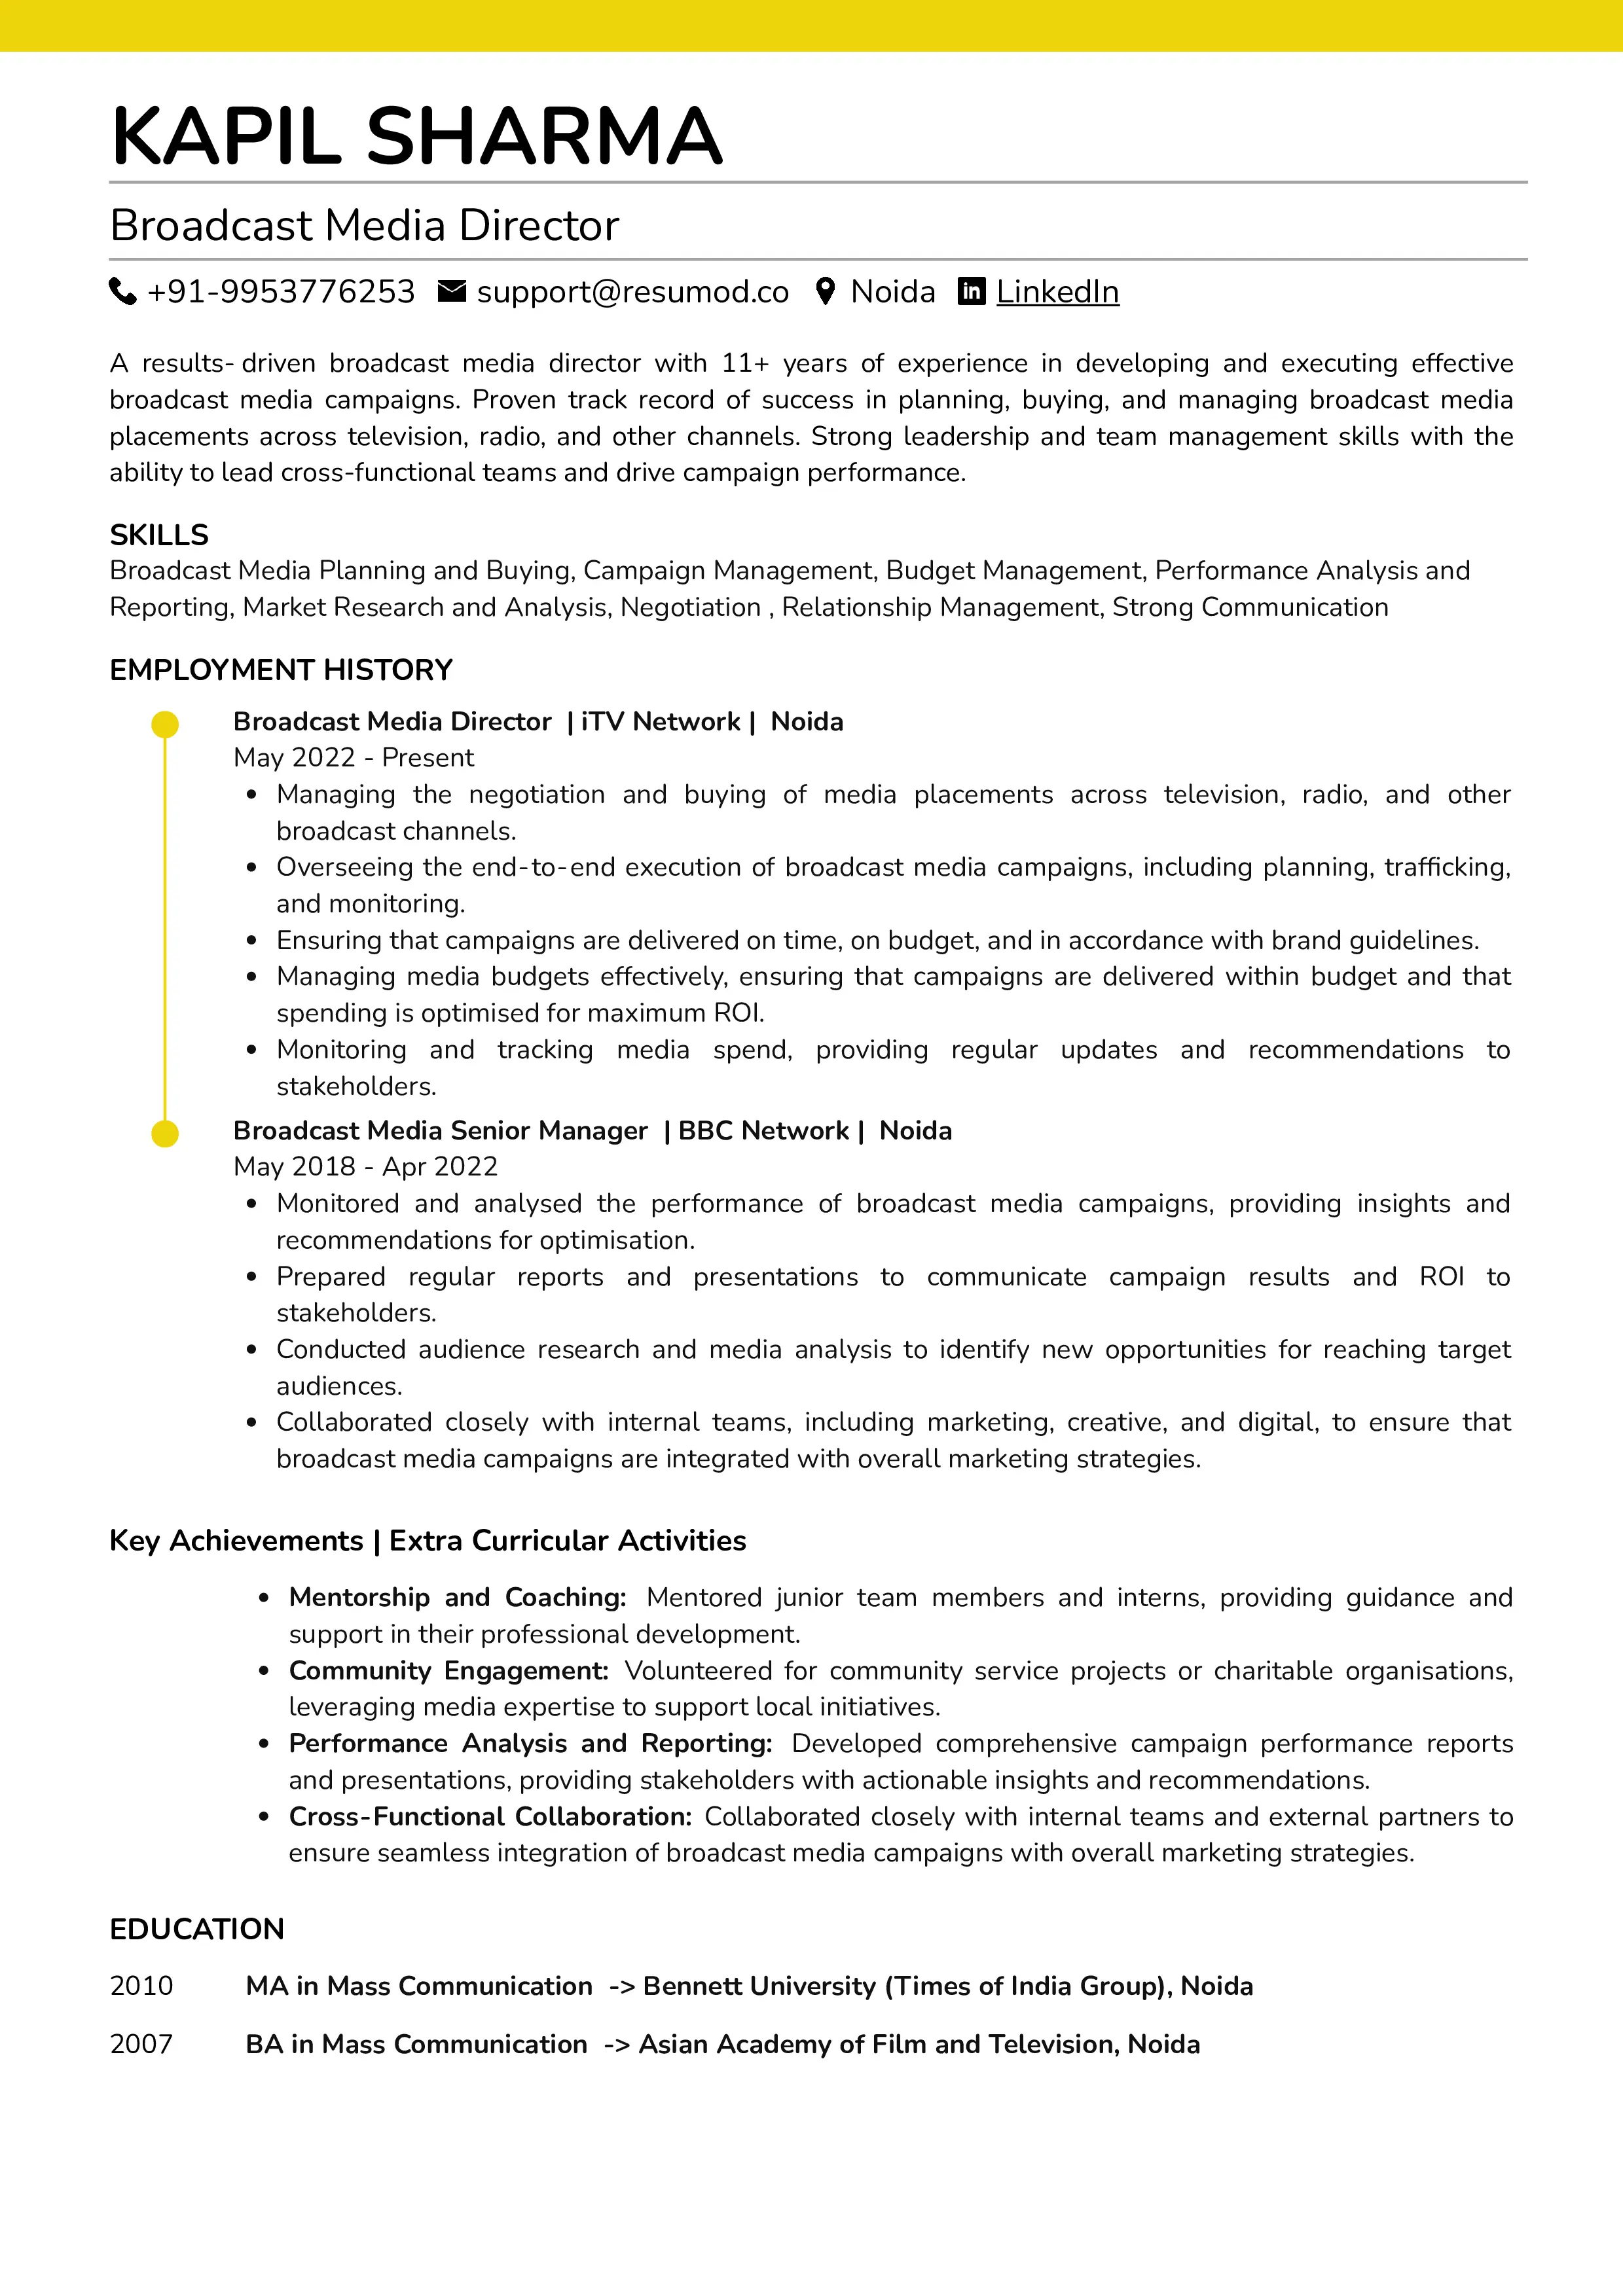 Sample Resume of Broadcasting Media Director | Free Resume Templates & Samples on Resumod.co